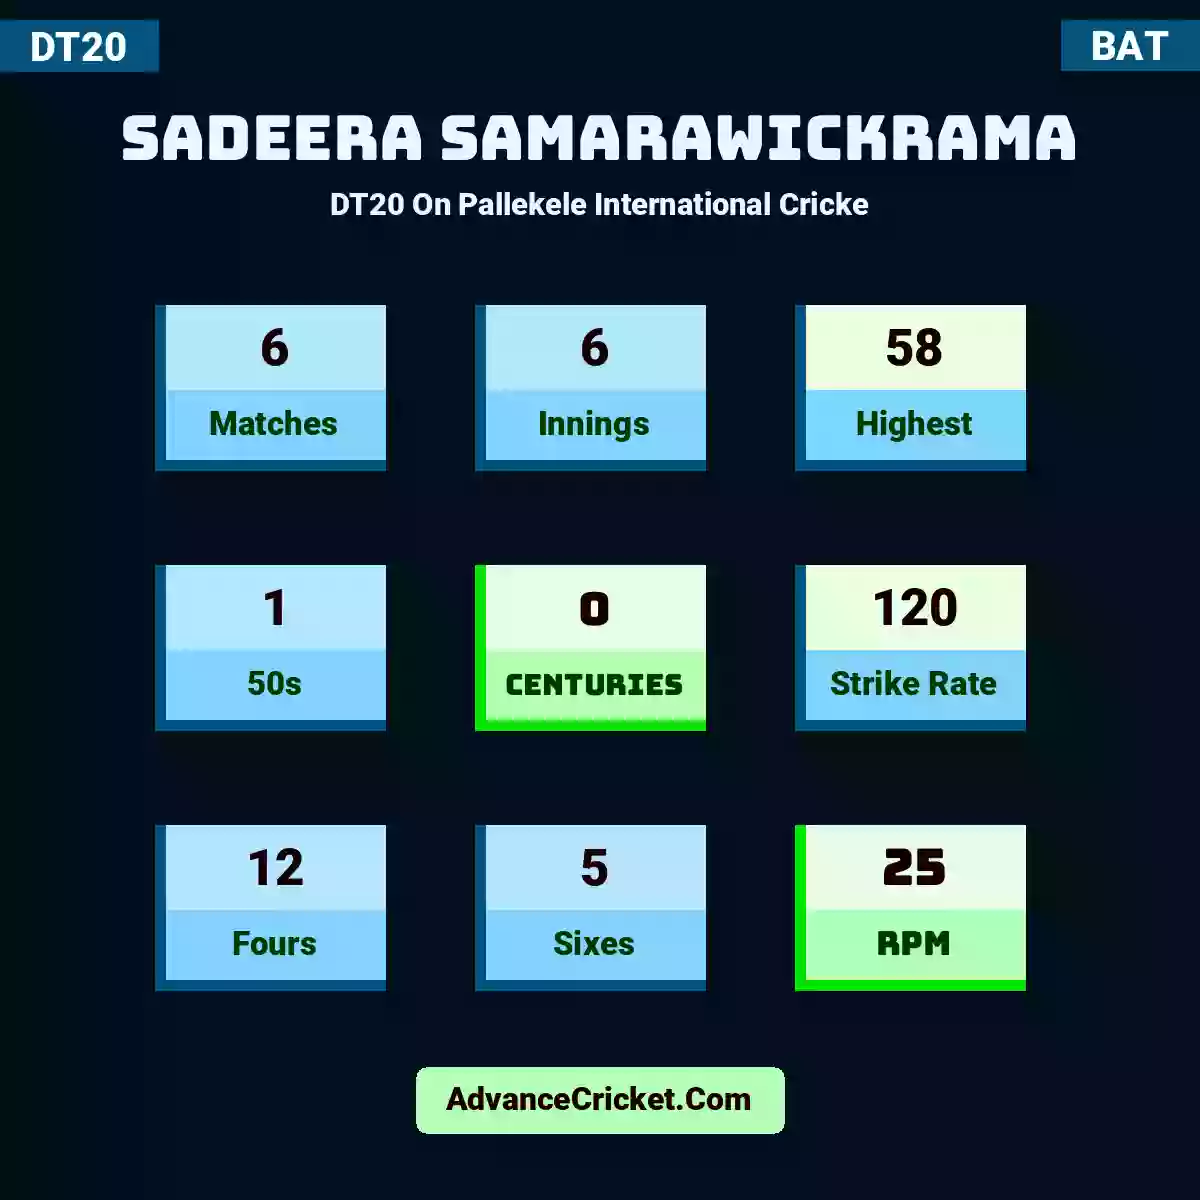 Sadeera Samarawickrama DT20  On Pallekele International Cricke, Sadeera Samarawickrama played 6 matches, scored 58 runs as highest, 1 half-centuries, and 0 centuries, with a strike rate of 120. S.Samarawickrama hit 12 fours and 5 sixes, with an RPM of 25.